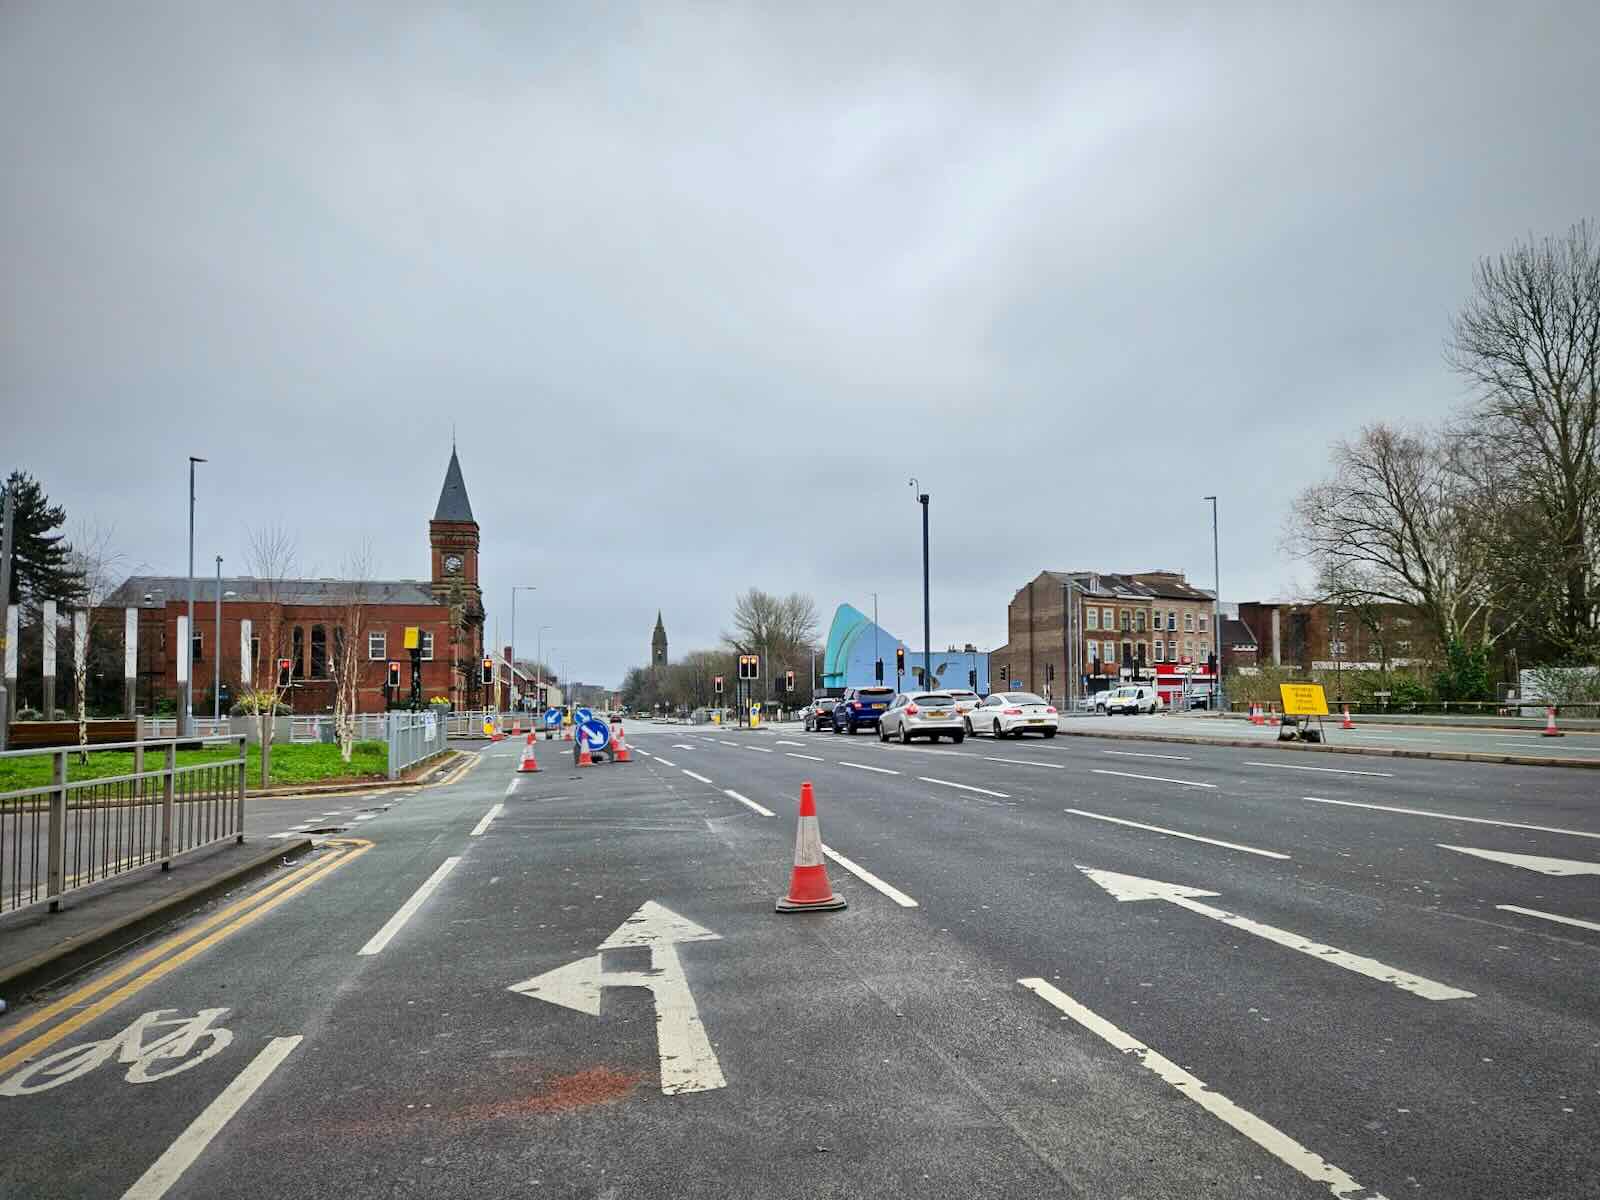 Cones continue towards the Edge Lane junction